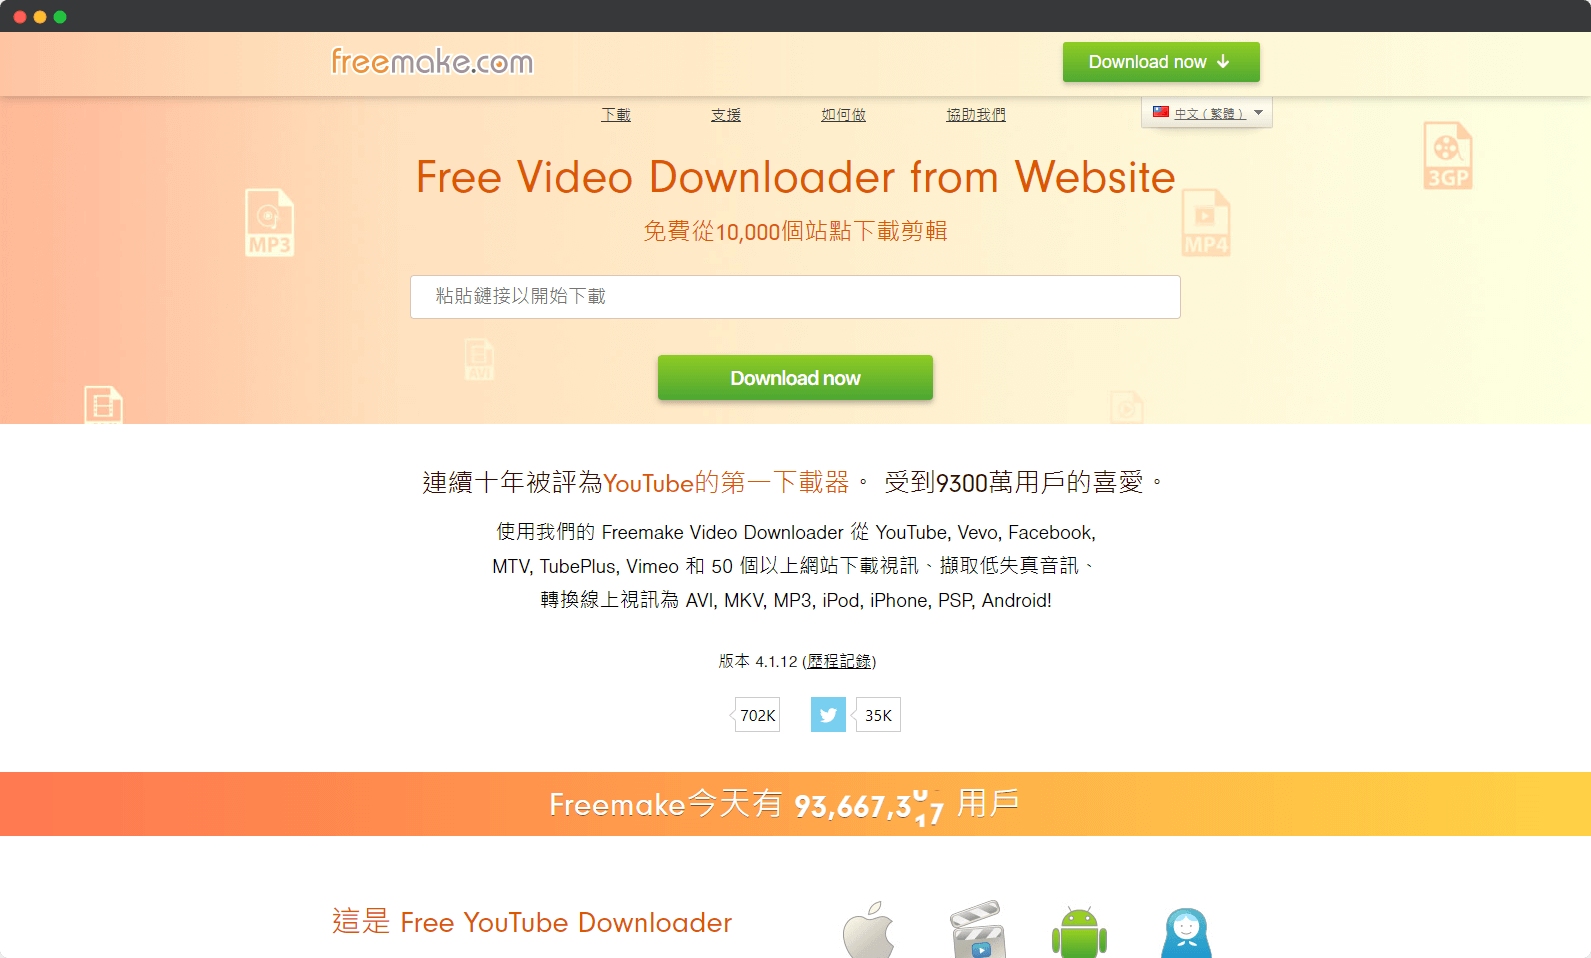 Freemake Video Downloader from Website